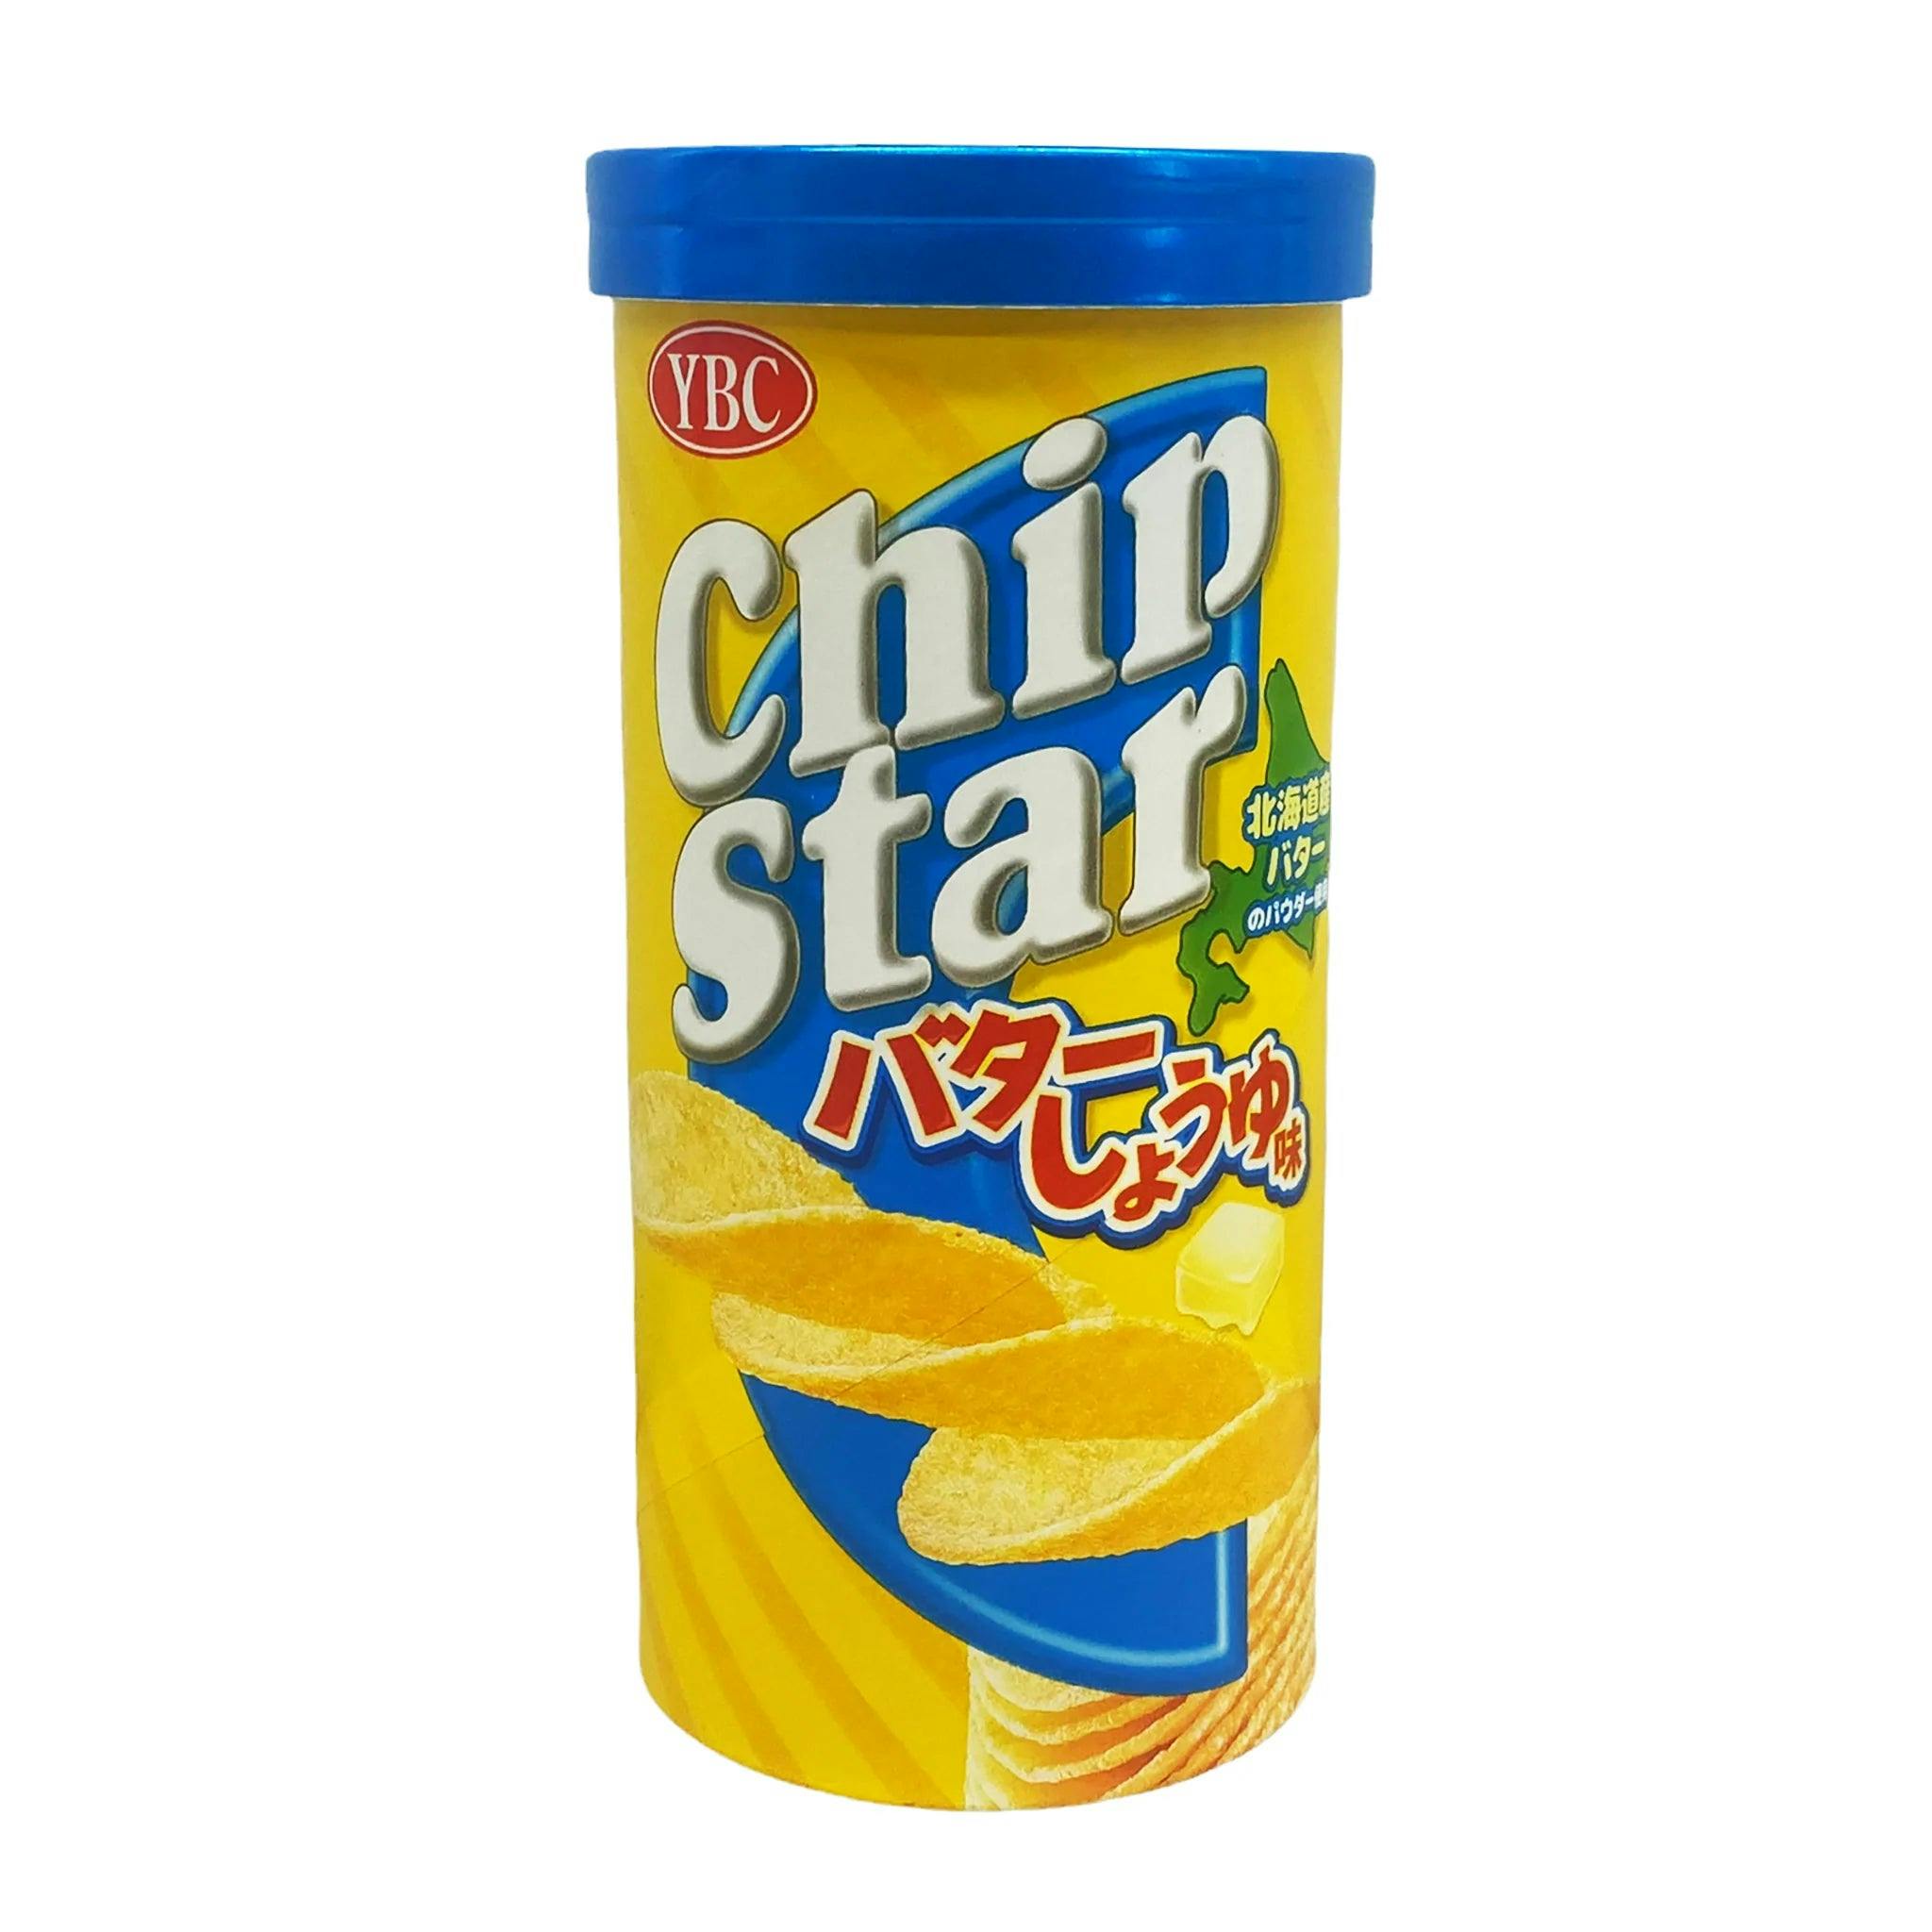 YBC Chip Star potato chips Butter Shoyu flavor 明星薯片 黄油酱油味